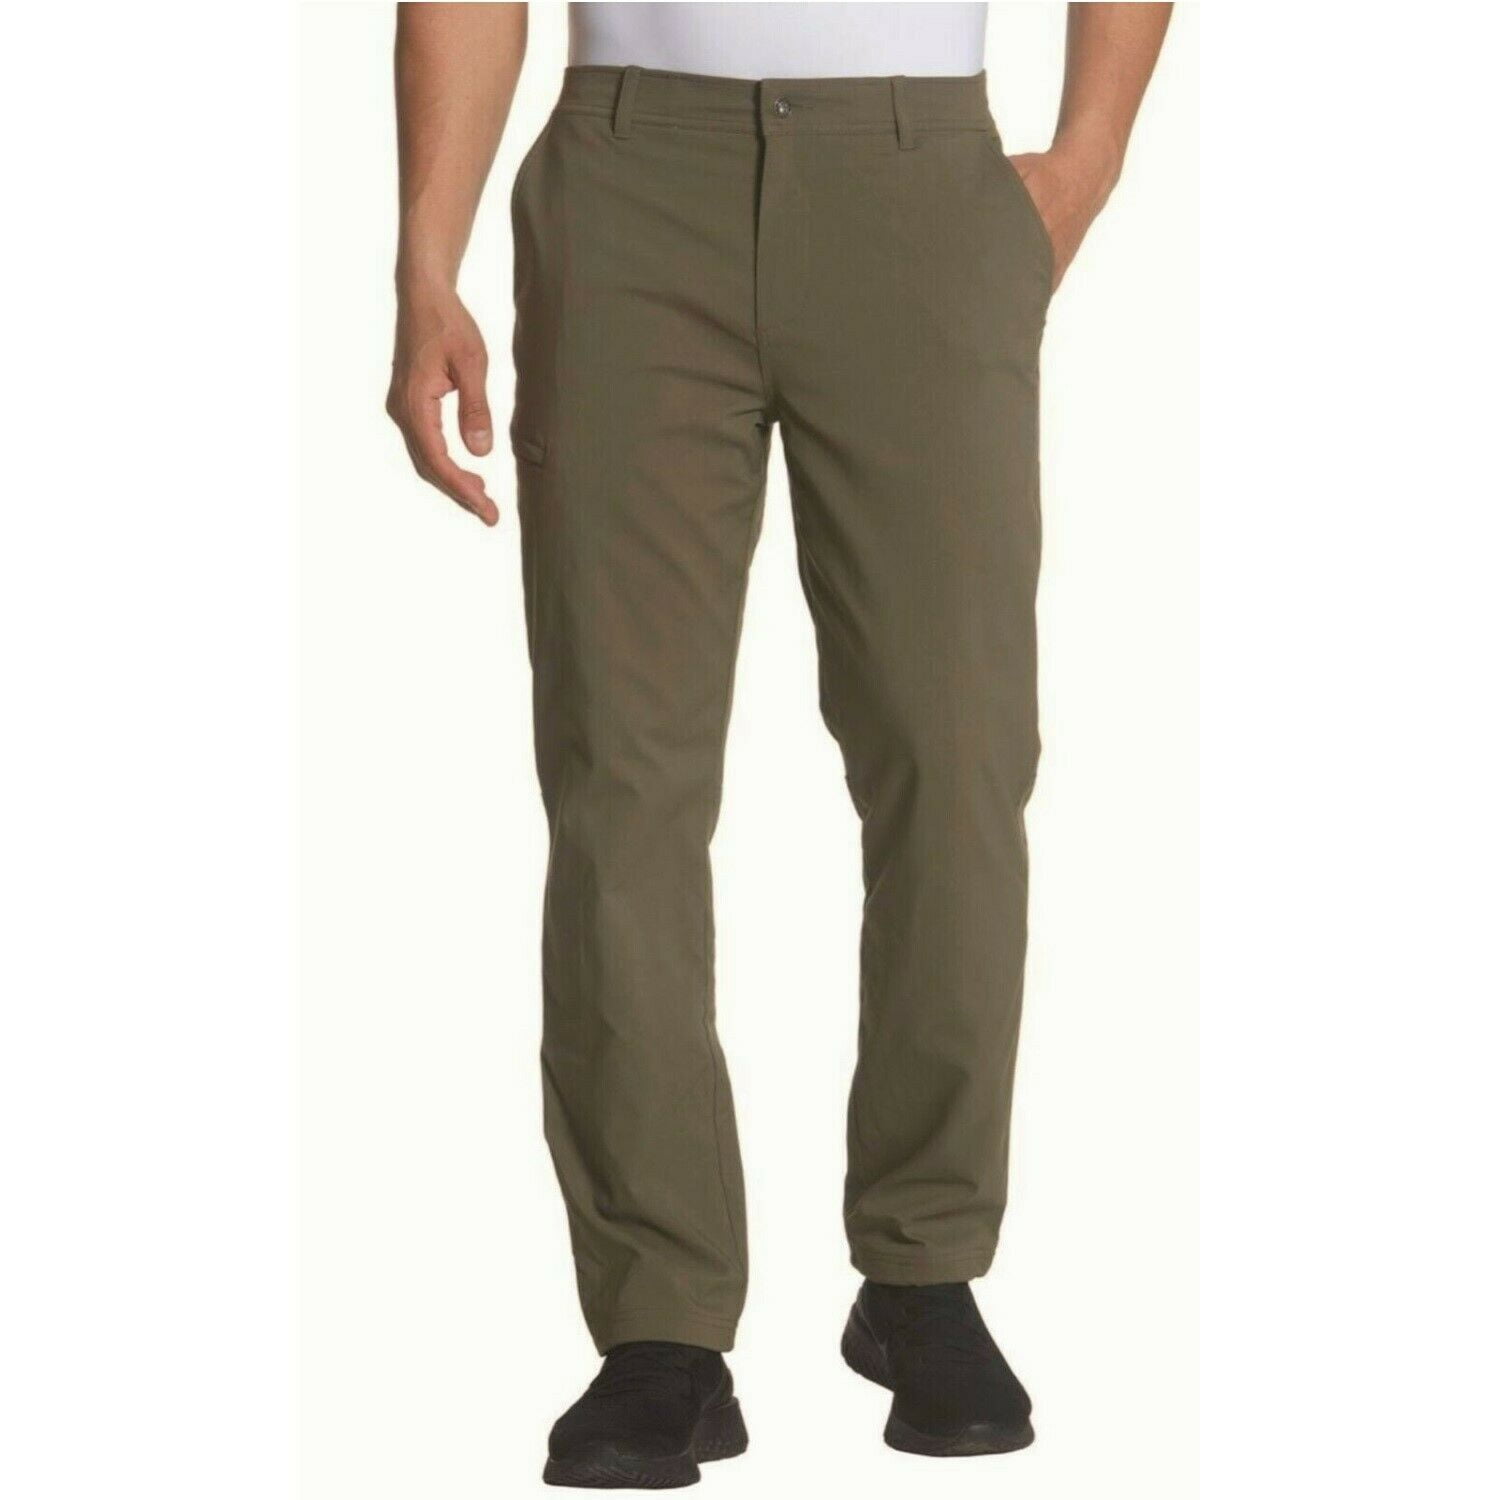 Gerry Men's Venture Fleece Lined Stretch Pants, Fatigue Olive 36 x